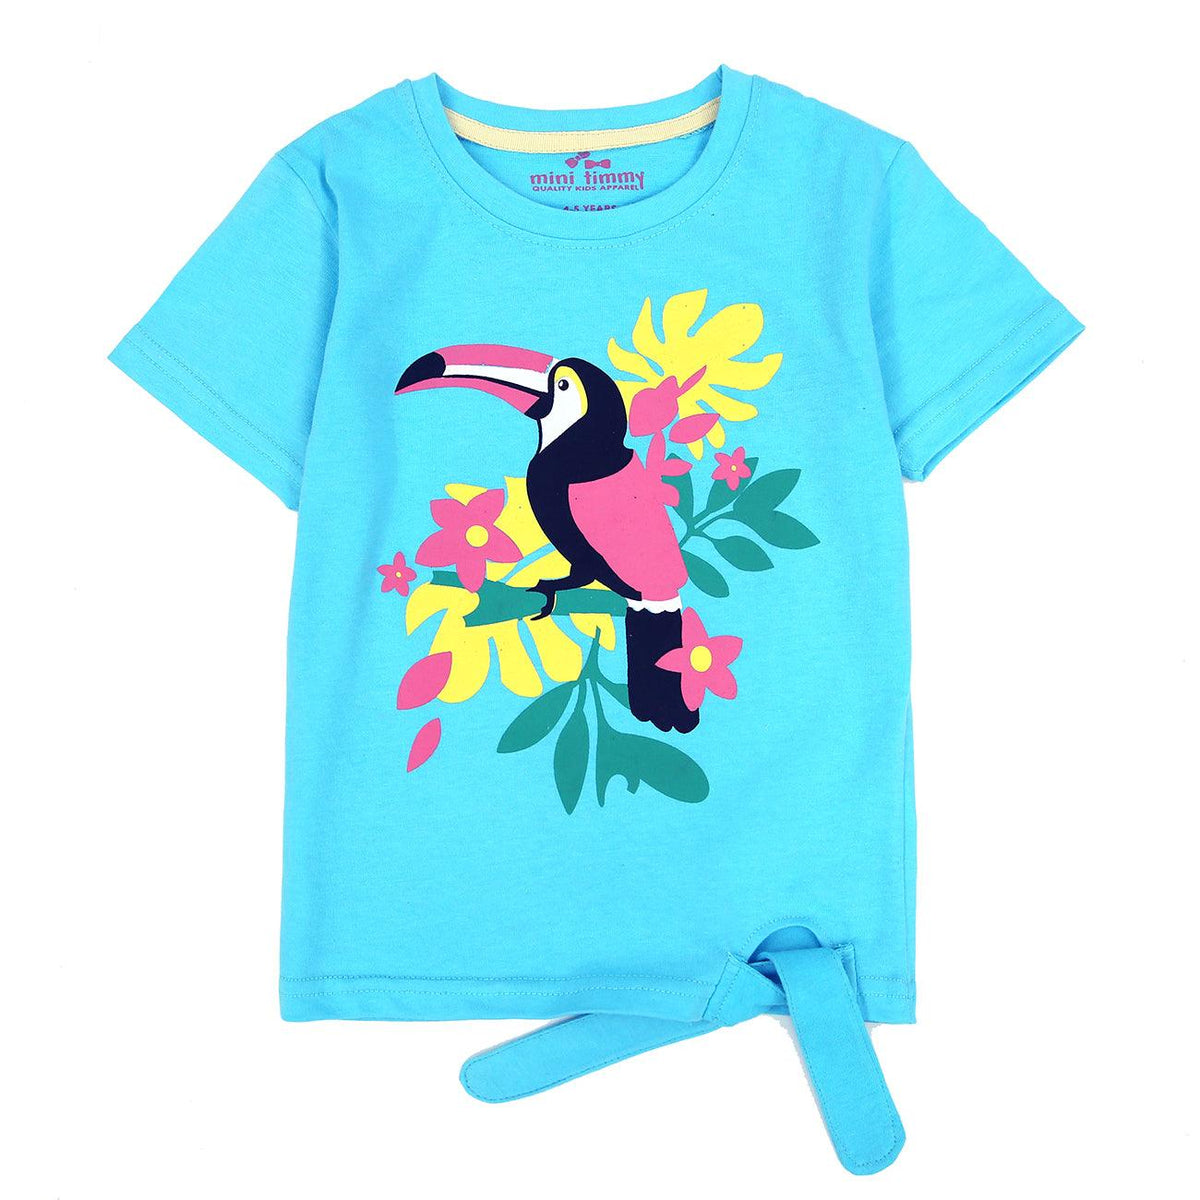 Girls Fashion Color-Full Printed Soft Cotton T-Shirt 9-12 MONTH - 9-10 YRS (MI-11679) - Brands River